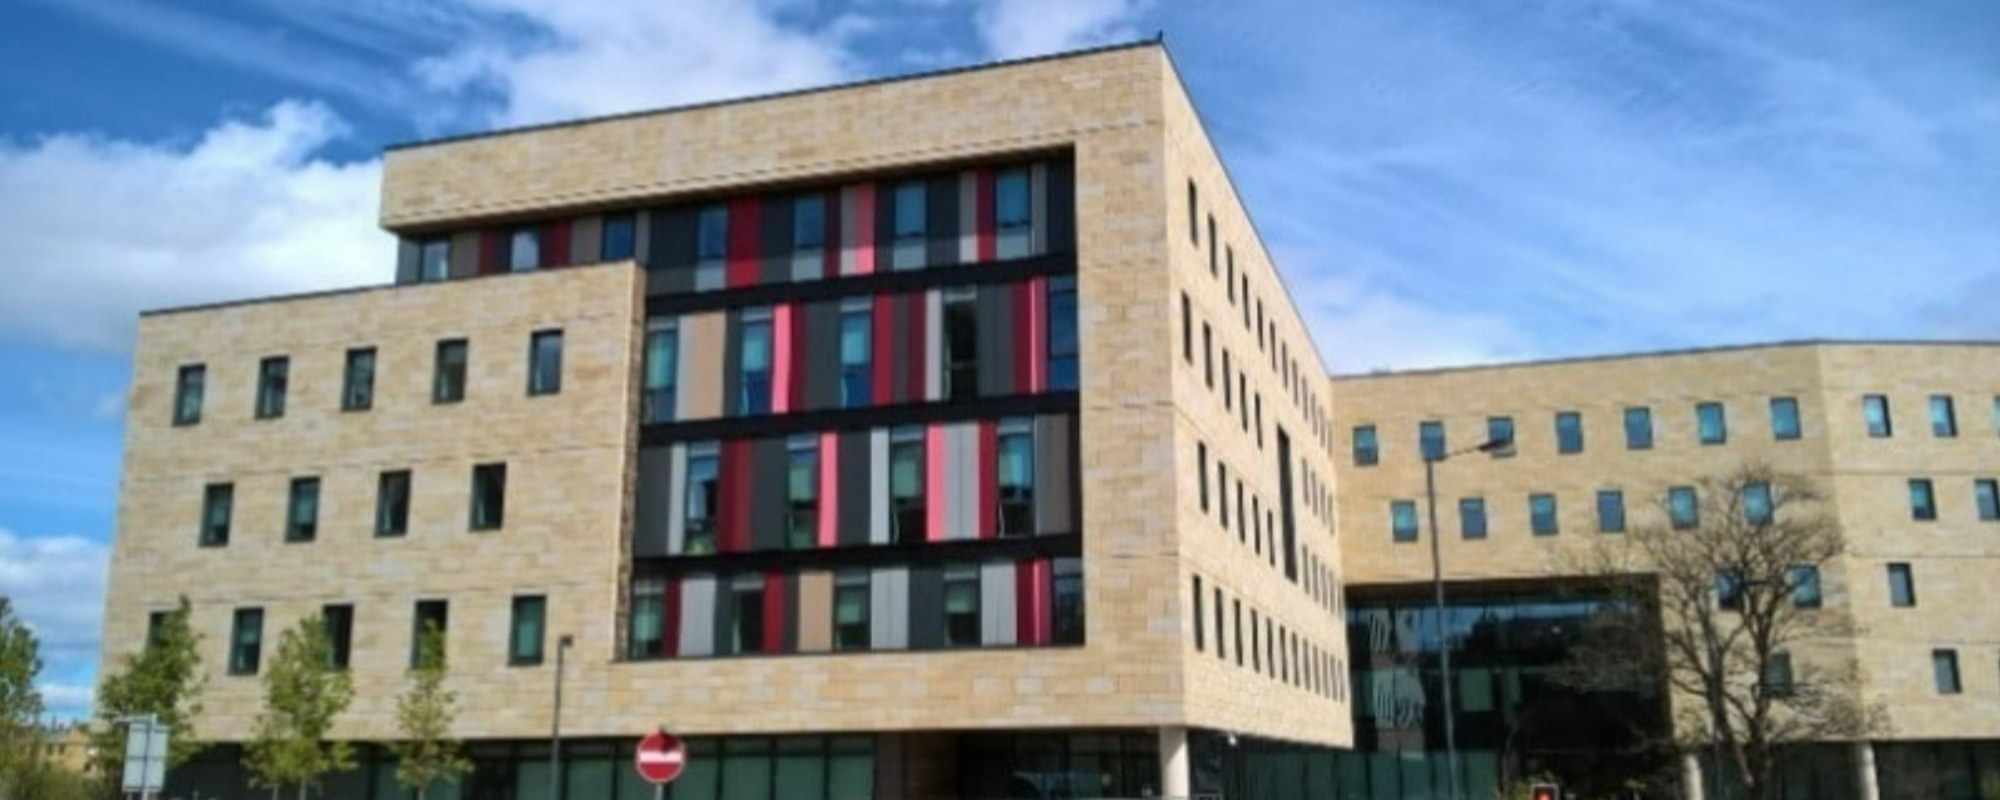 Bradford College Building